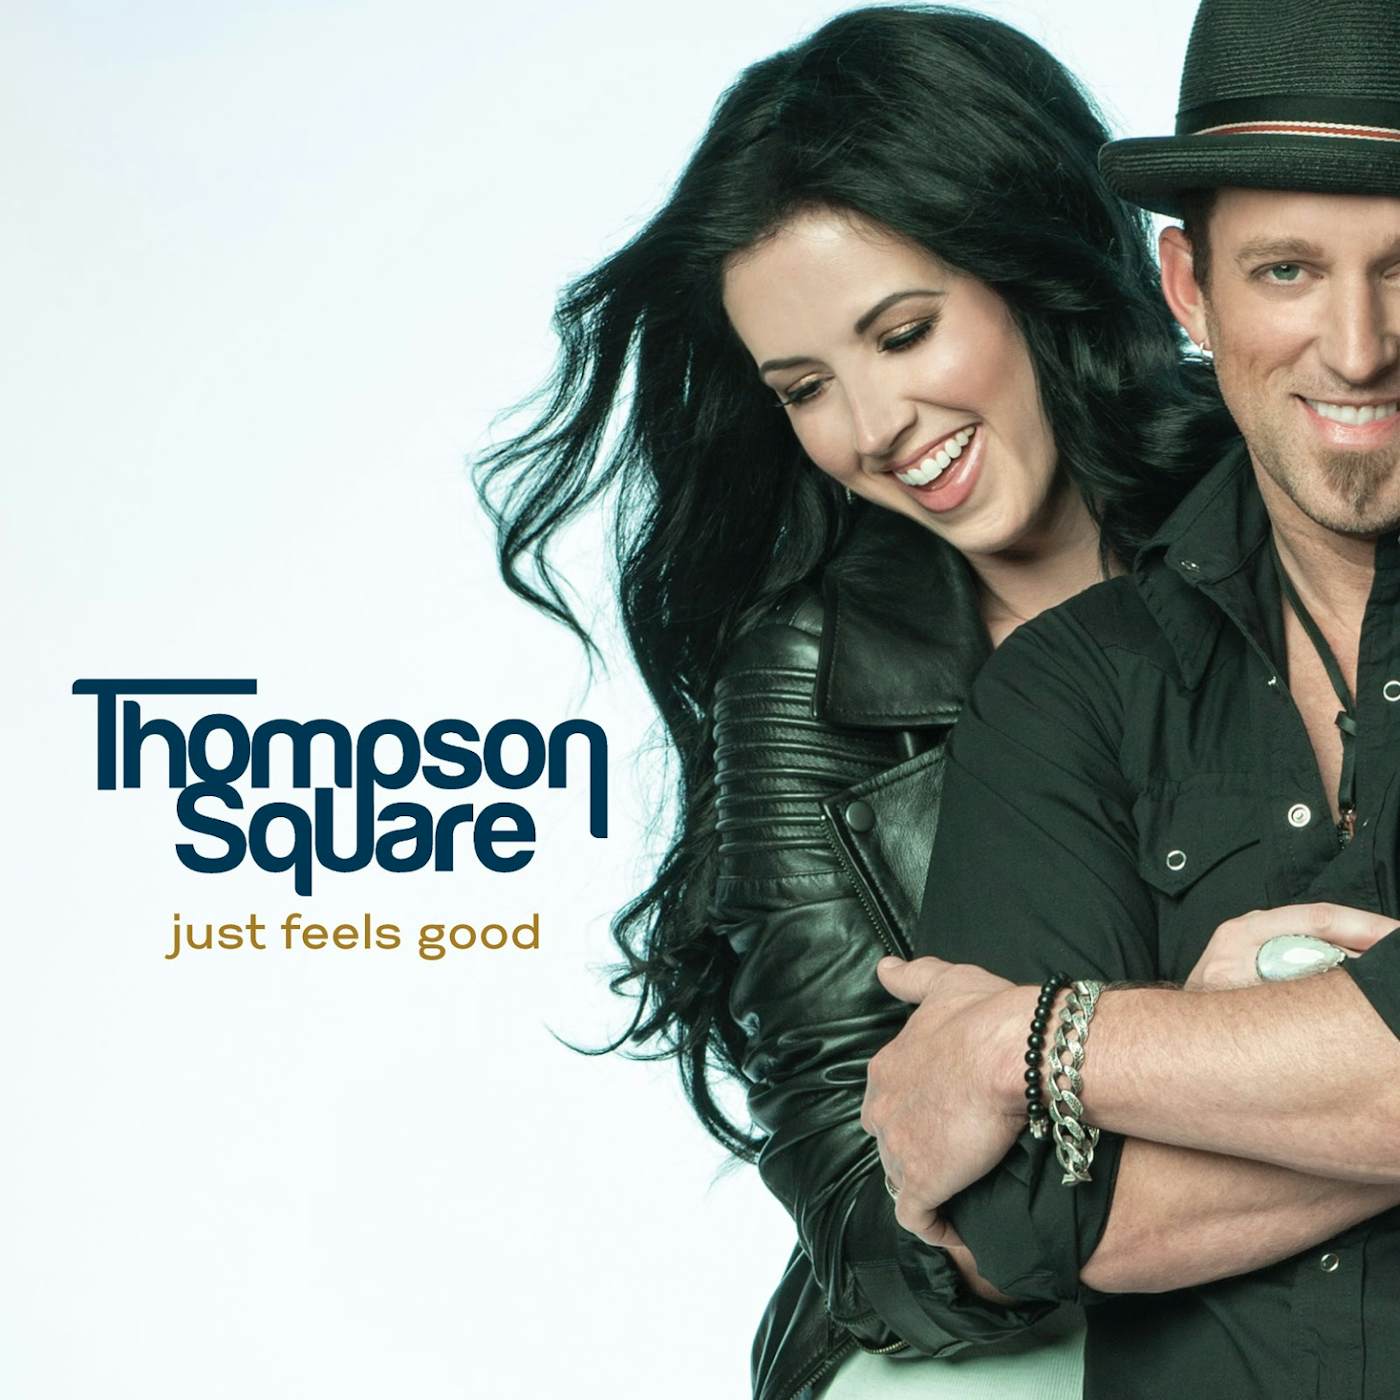 Thompson Square JUST FEELS GOOD CD